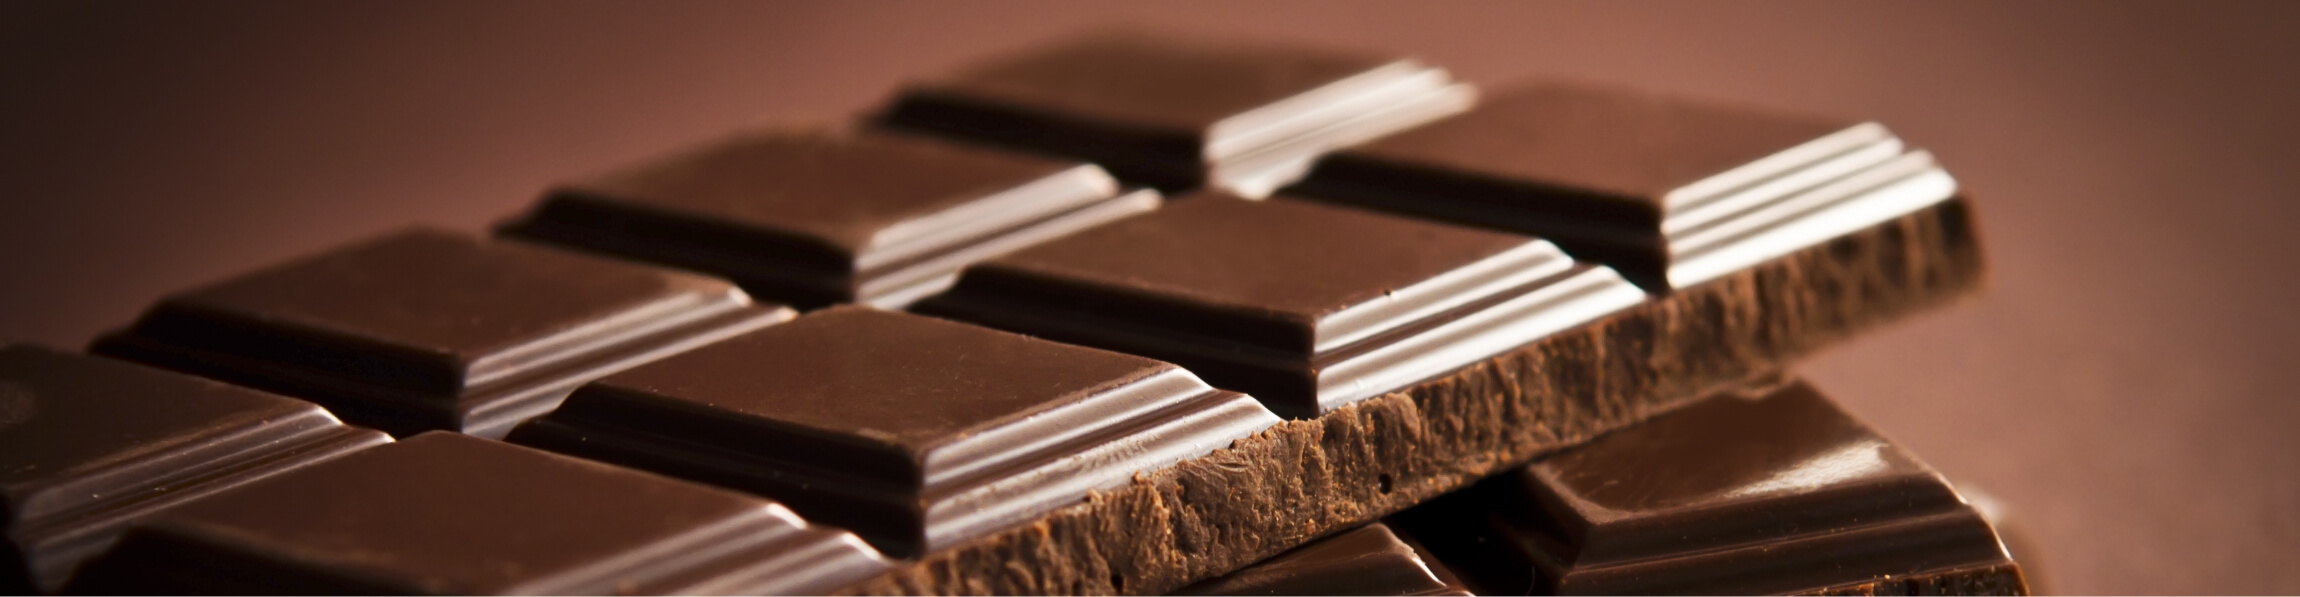 Photo of Chocolate bars